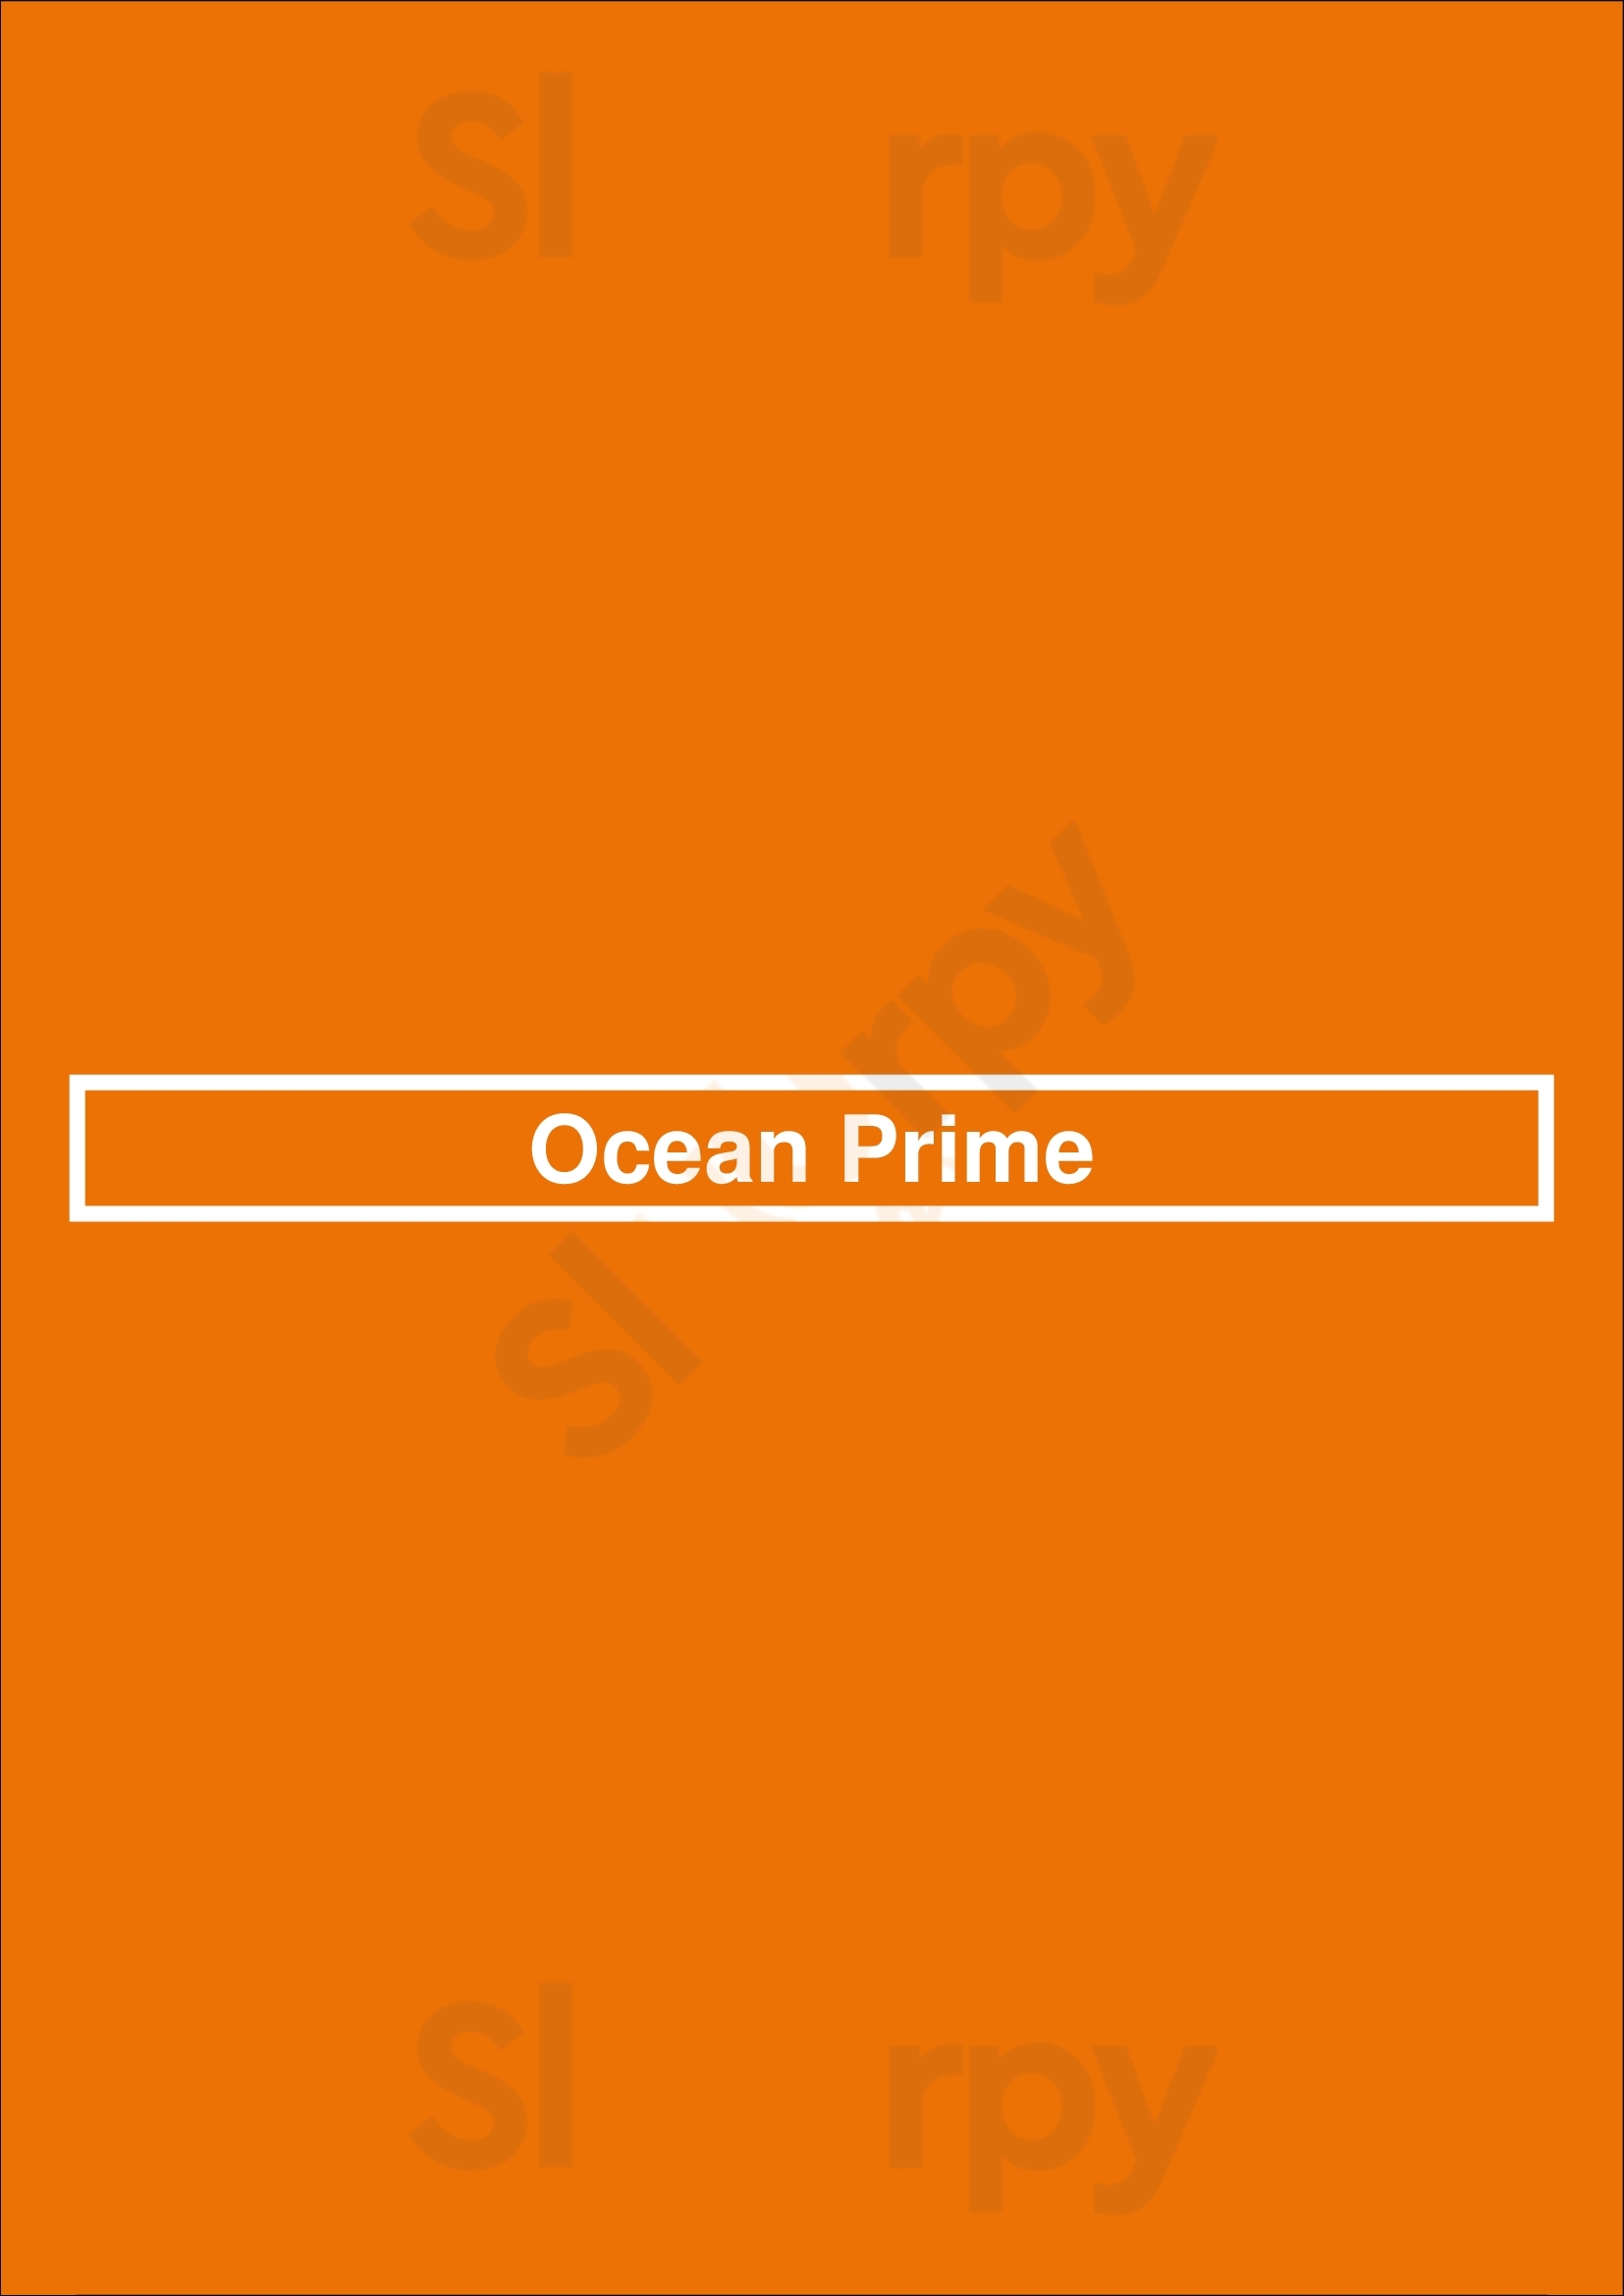 Ocean Prime Dallas Menu - 1